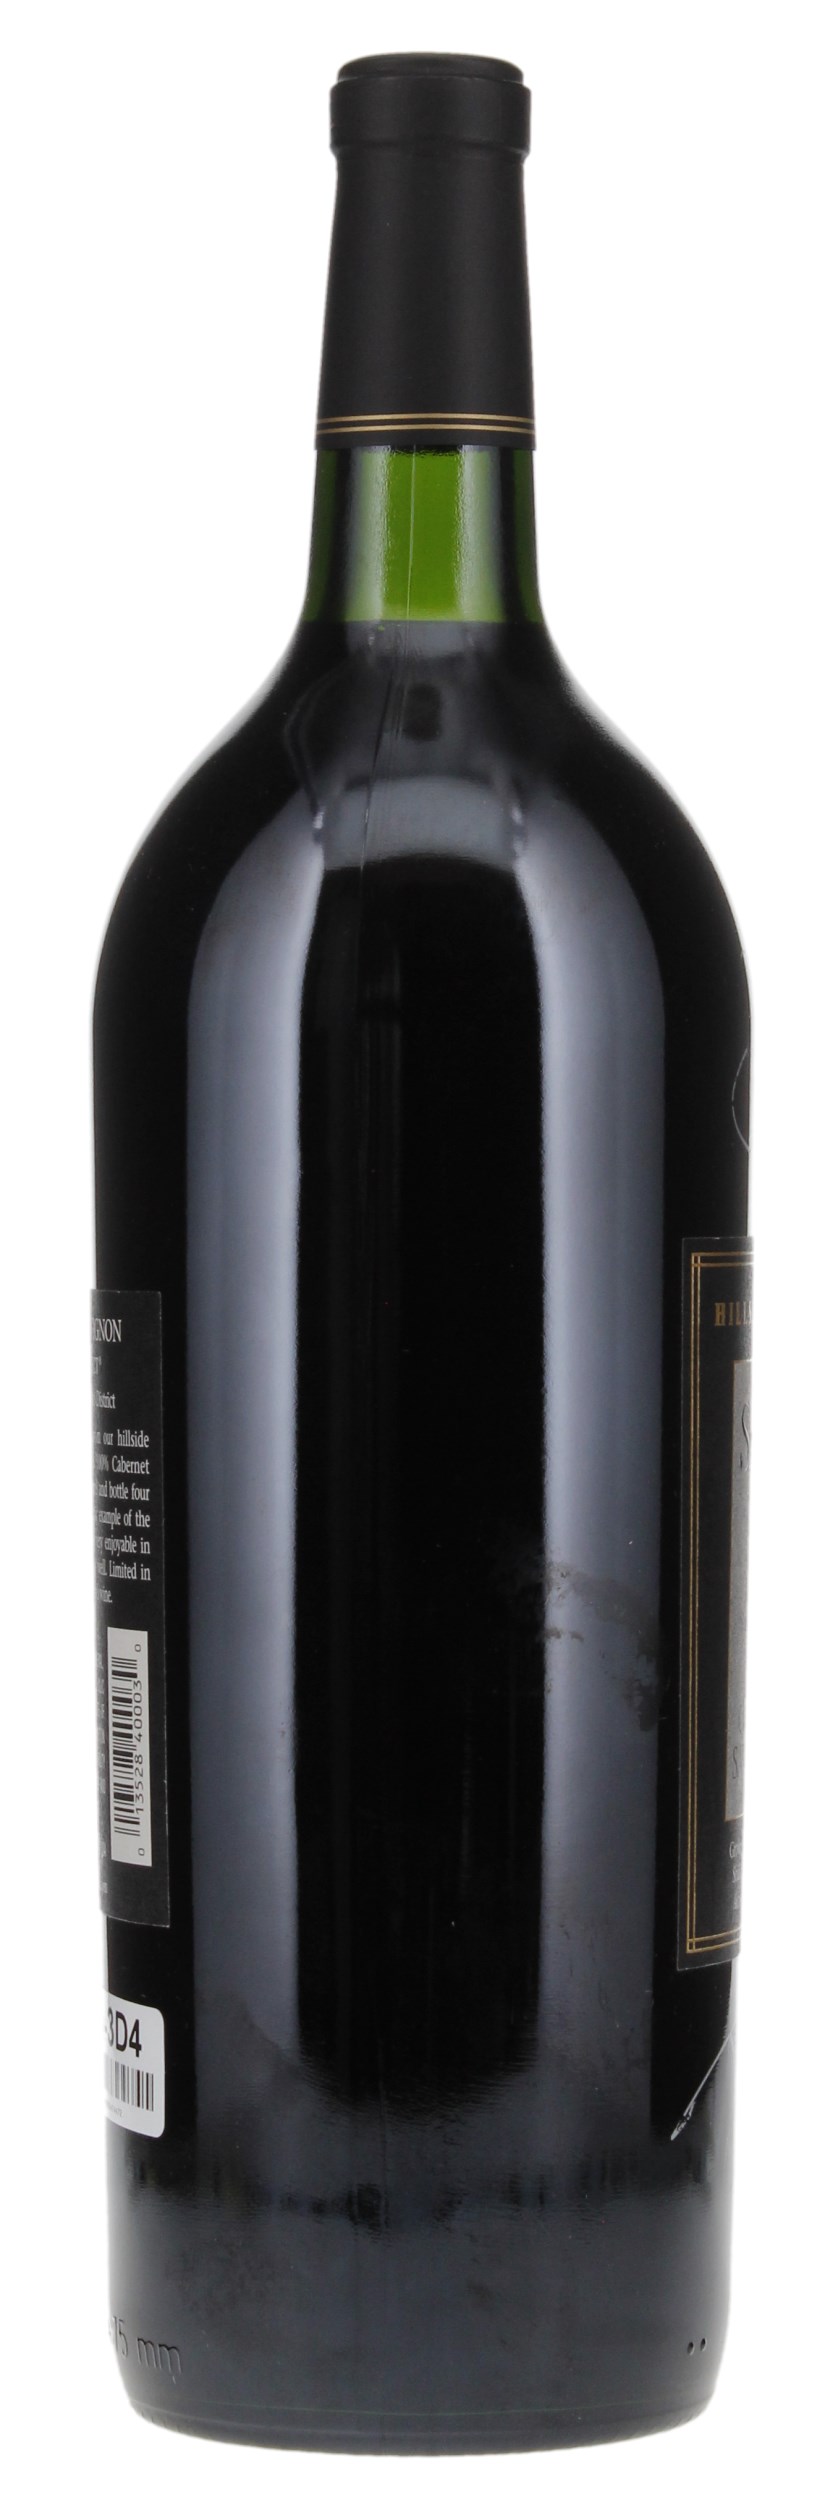 1999 Shafer Vineyards Hillside Select Cabernet Sauvignon, 1.5ltr